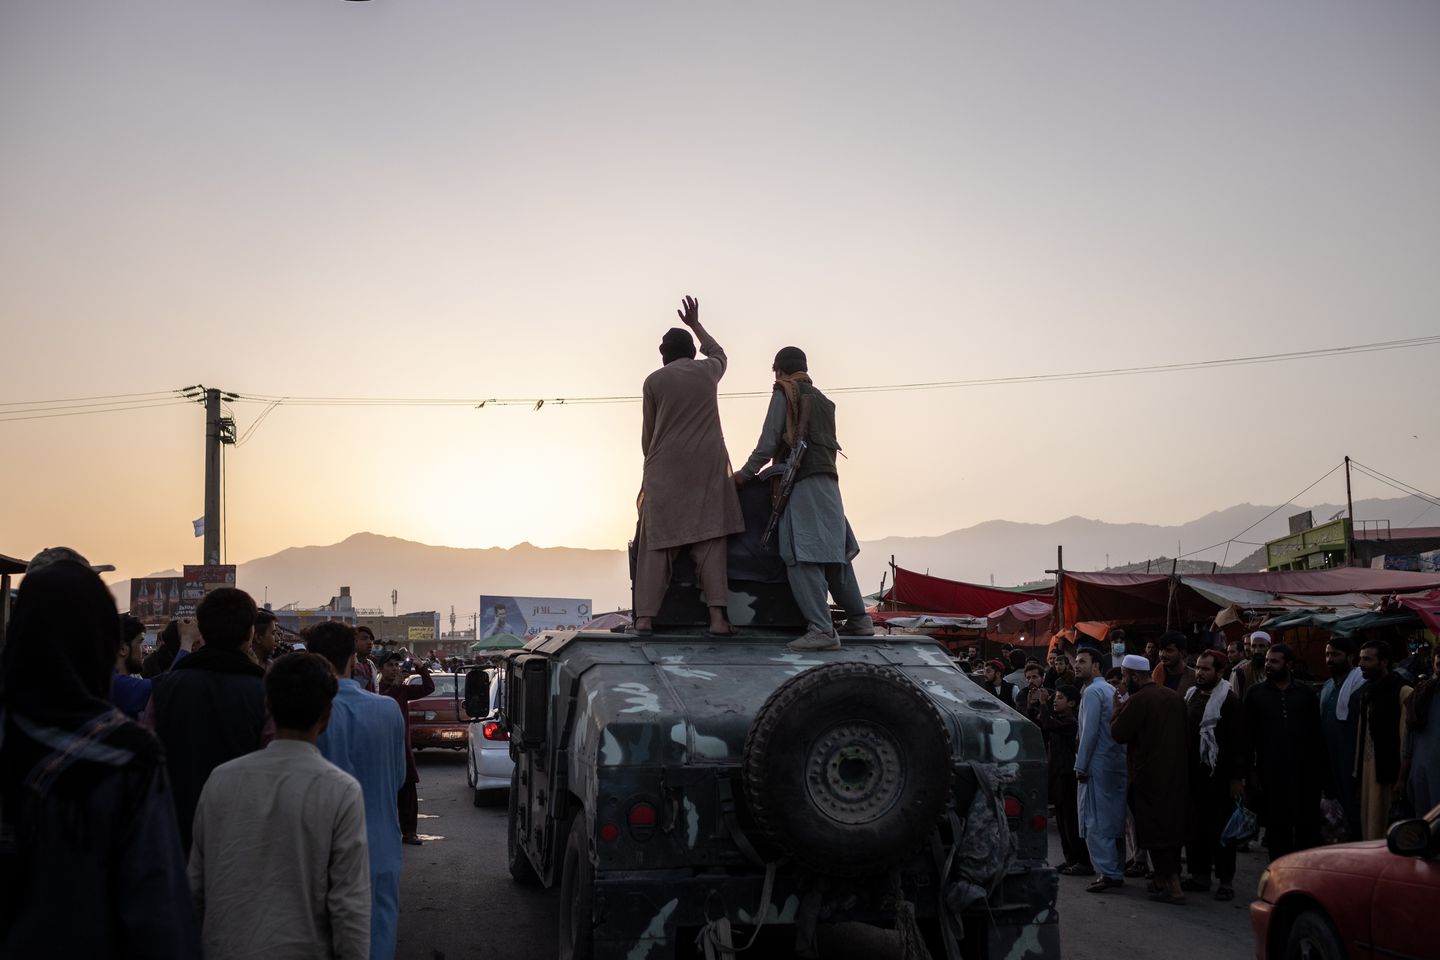 Kabul chaos as Taliban take power, and thousands flee